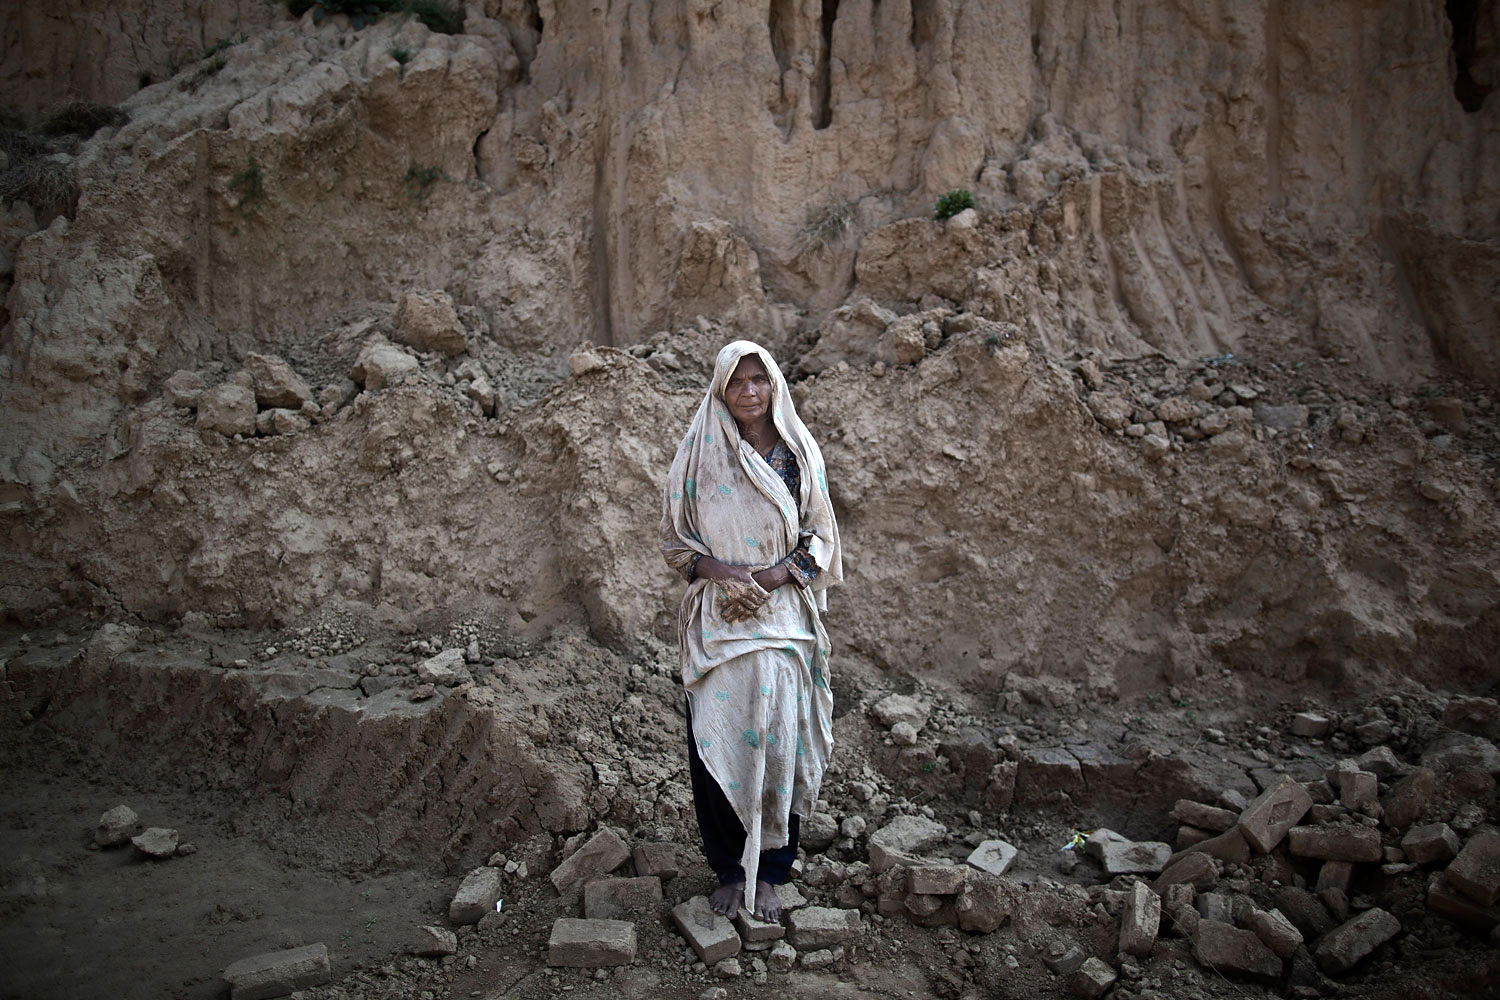 APTOPIX Pakistan Women Labor For Life Photo Essay